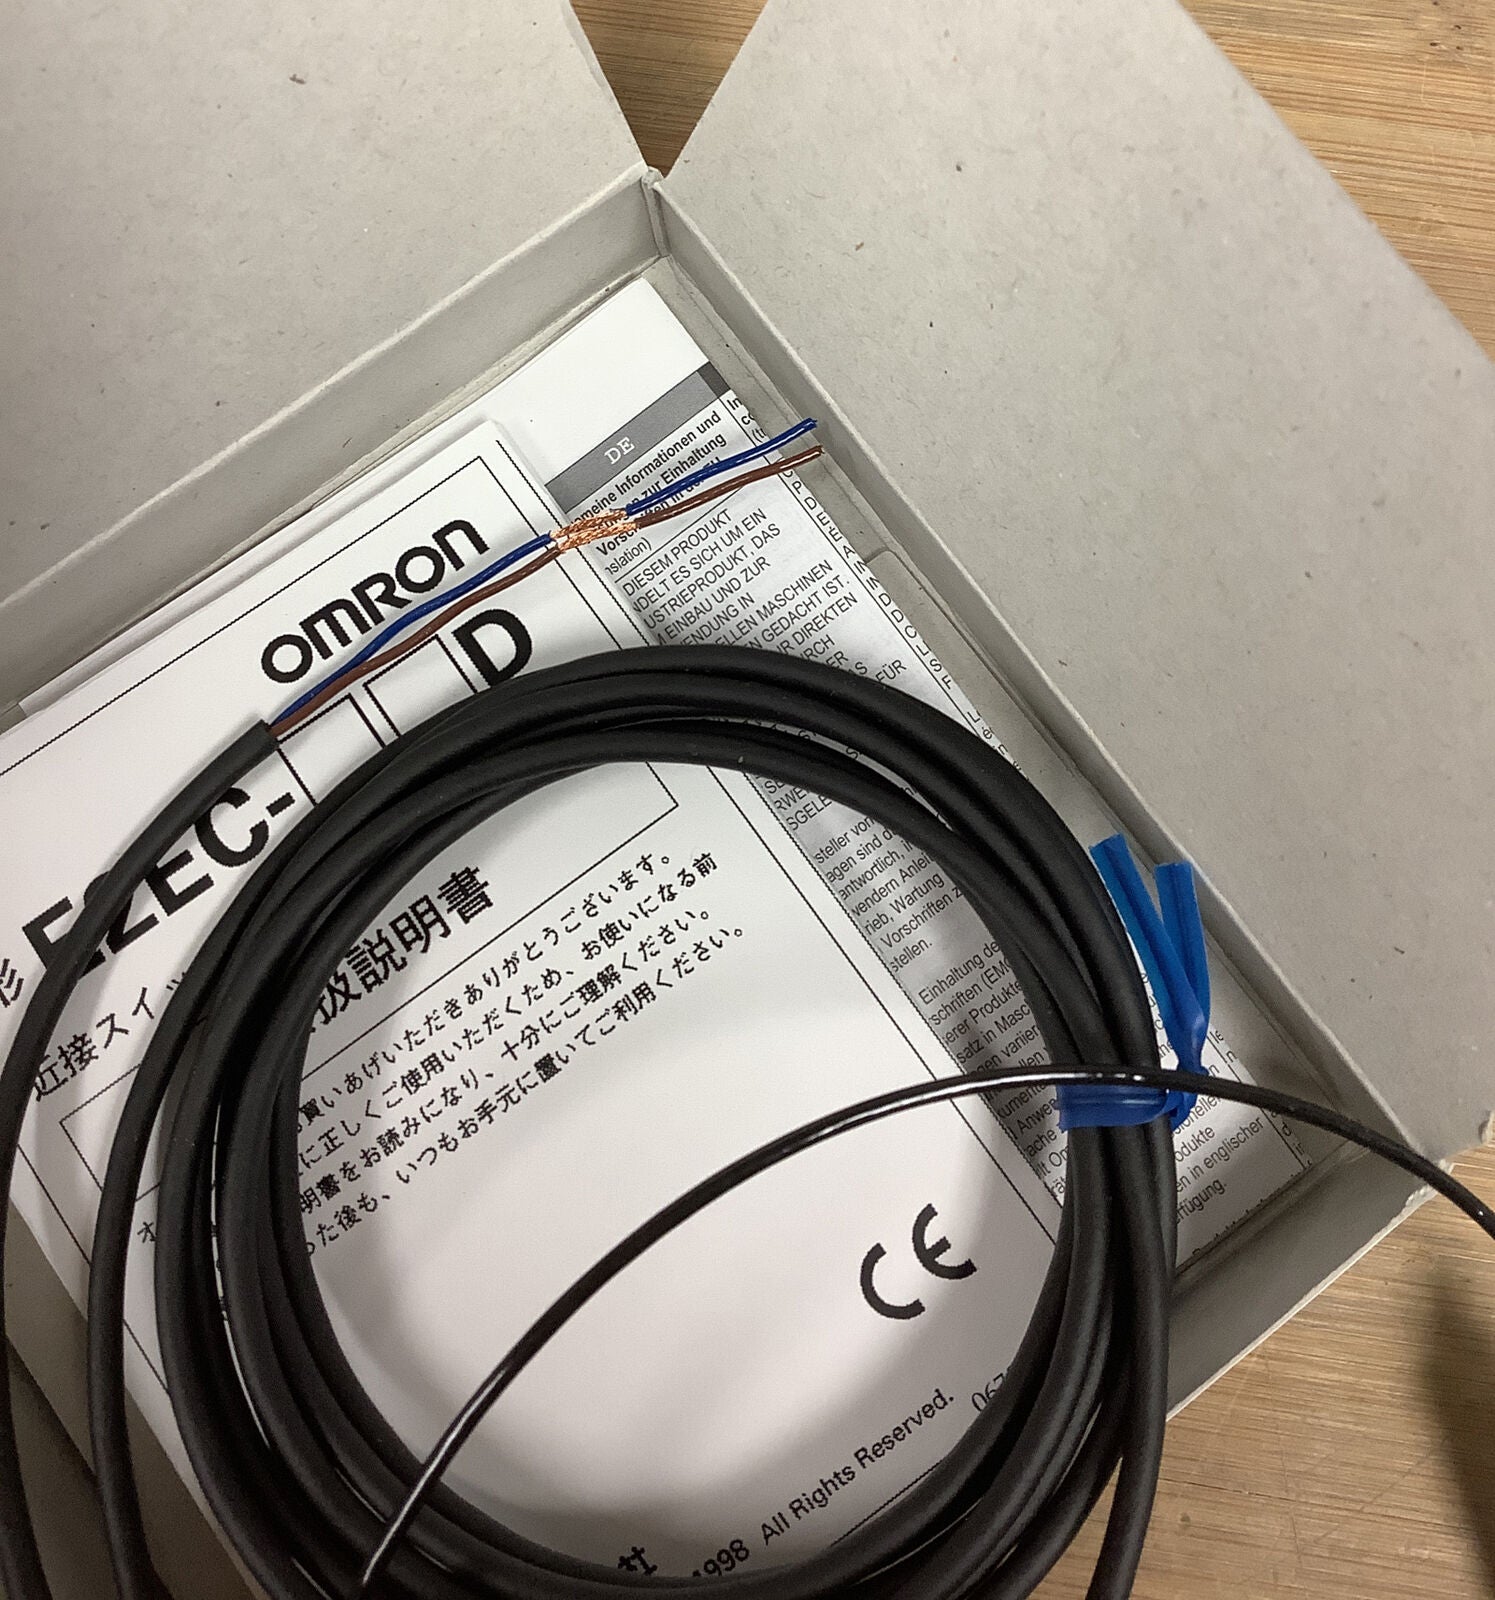 OMRON E2EC-CR8D1 New Proximity Sensor / Switch 2M  (GR106)